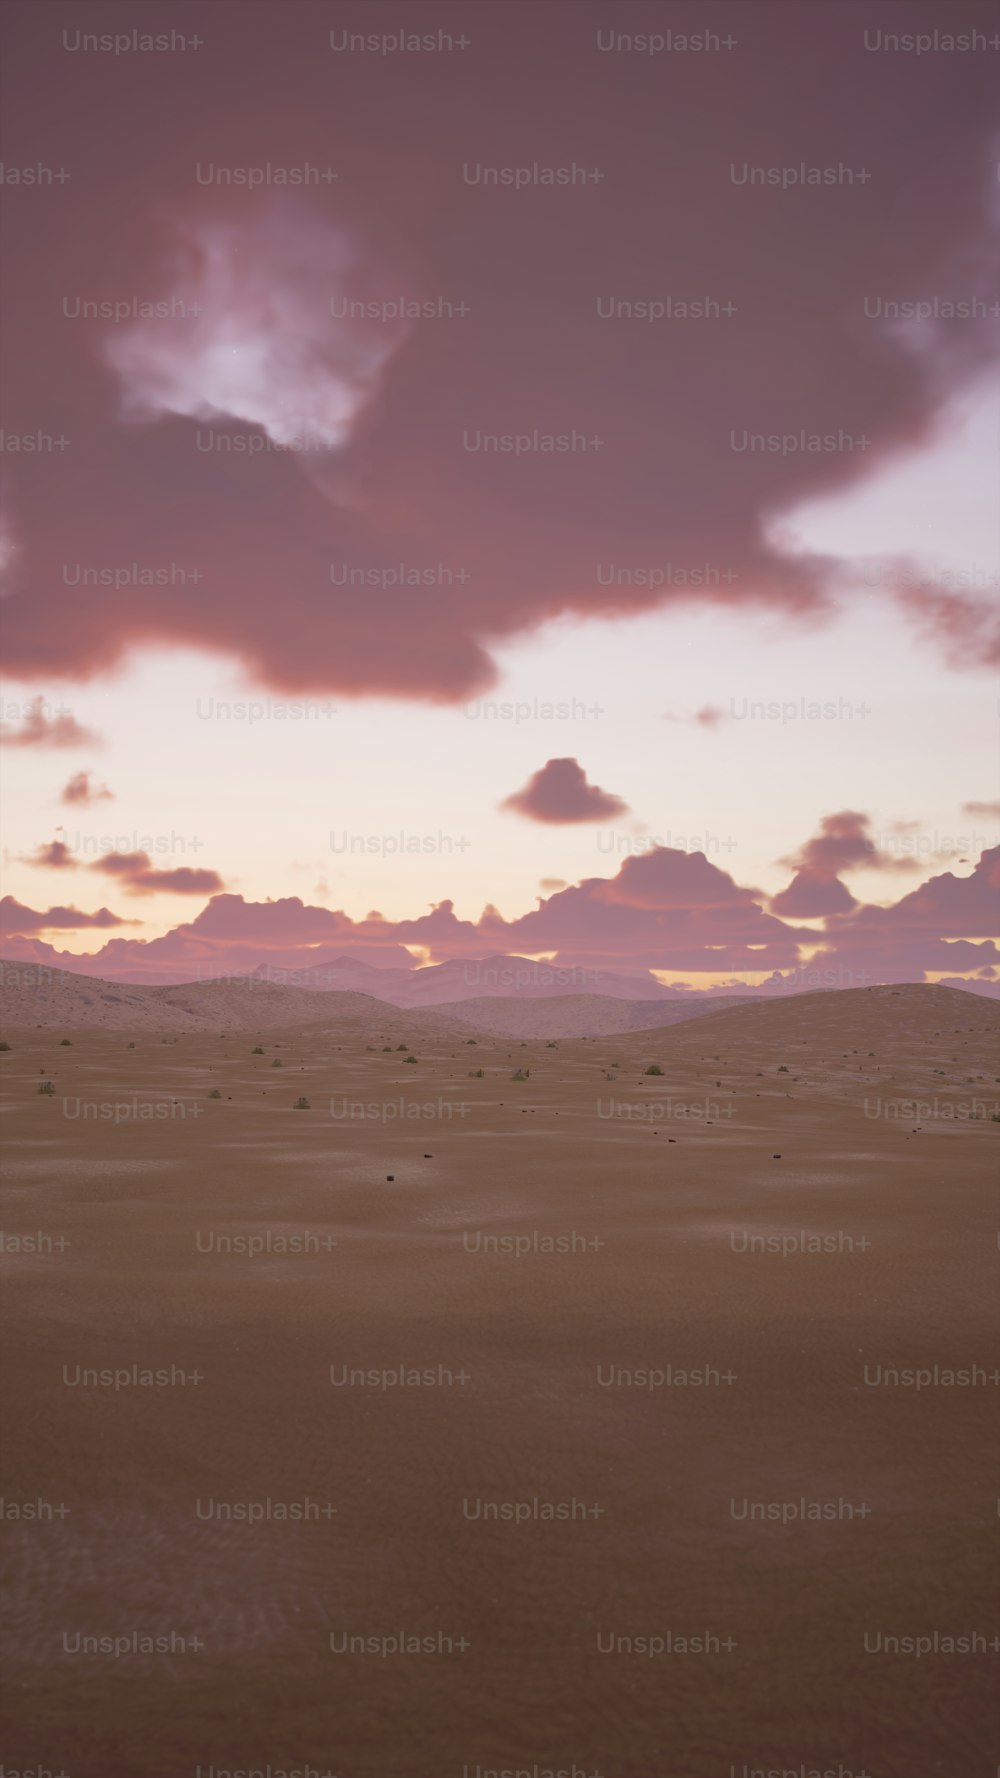 Un caballo solitario parado en medio de un desierto